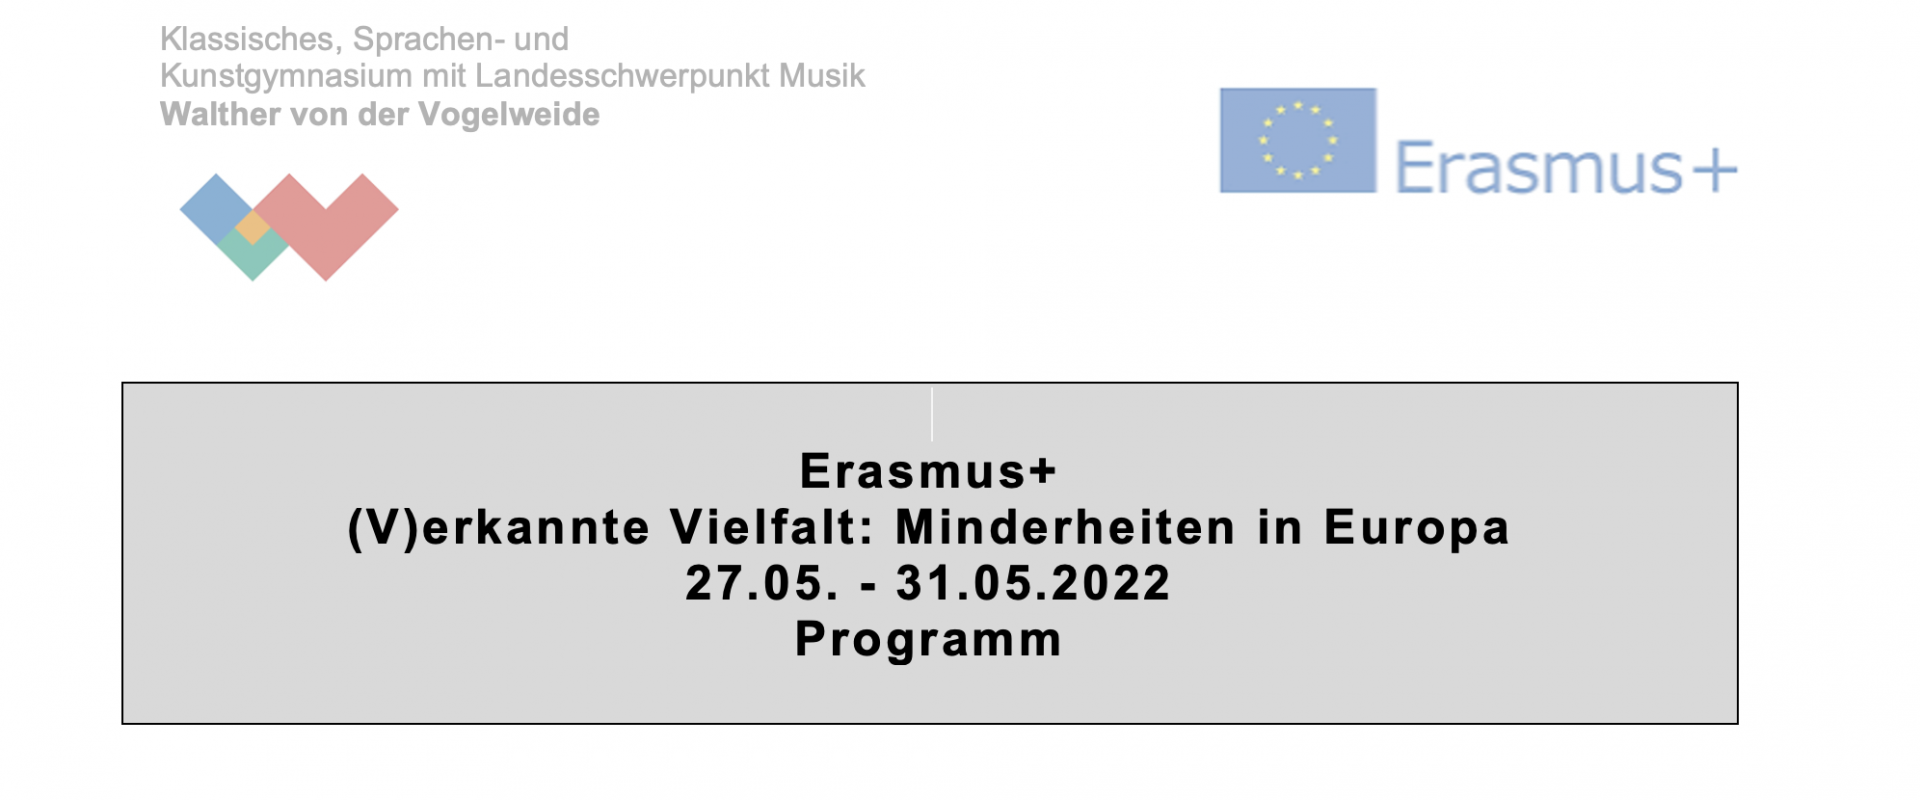 Treffen/ Meeting Bozen (27.05. - 31.05.2022): Programm 